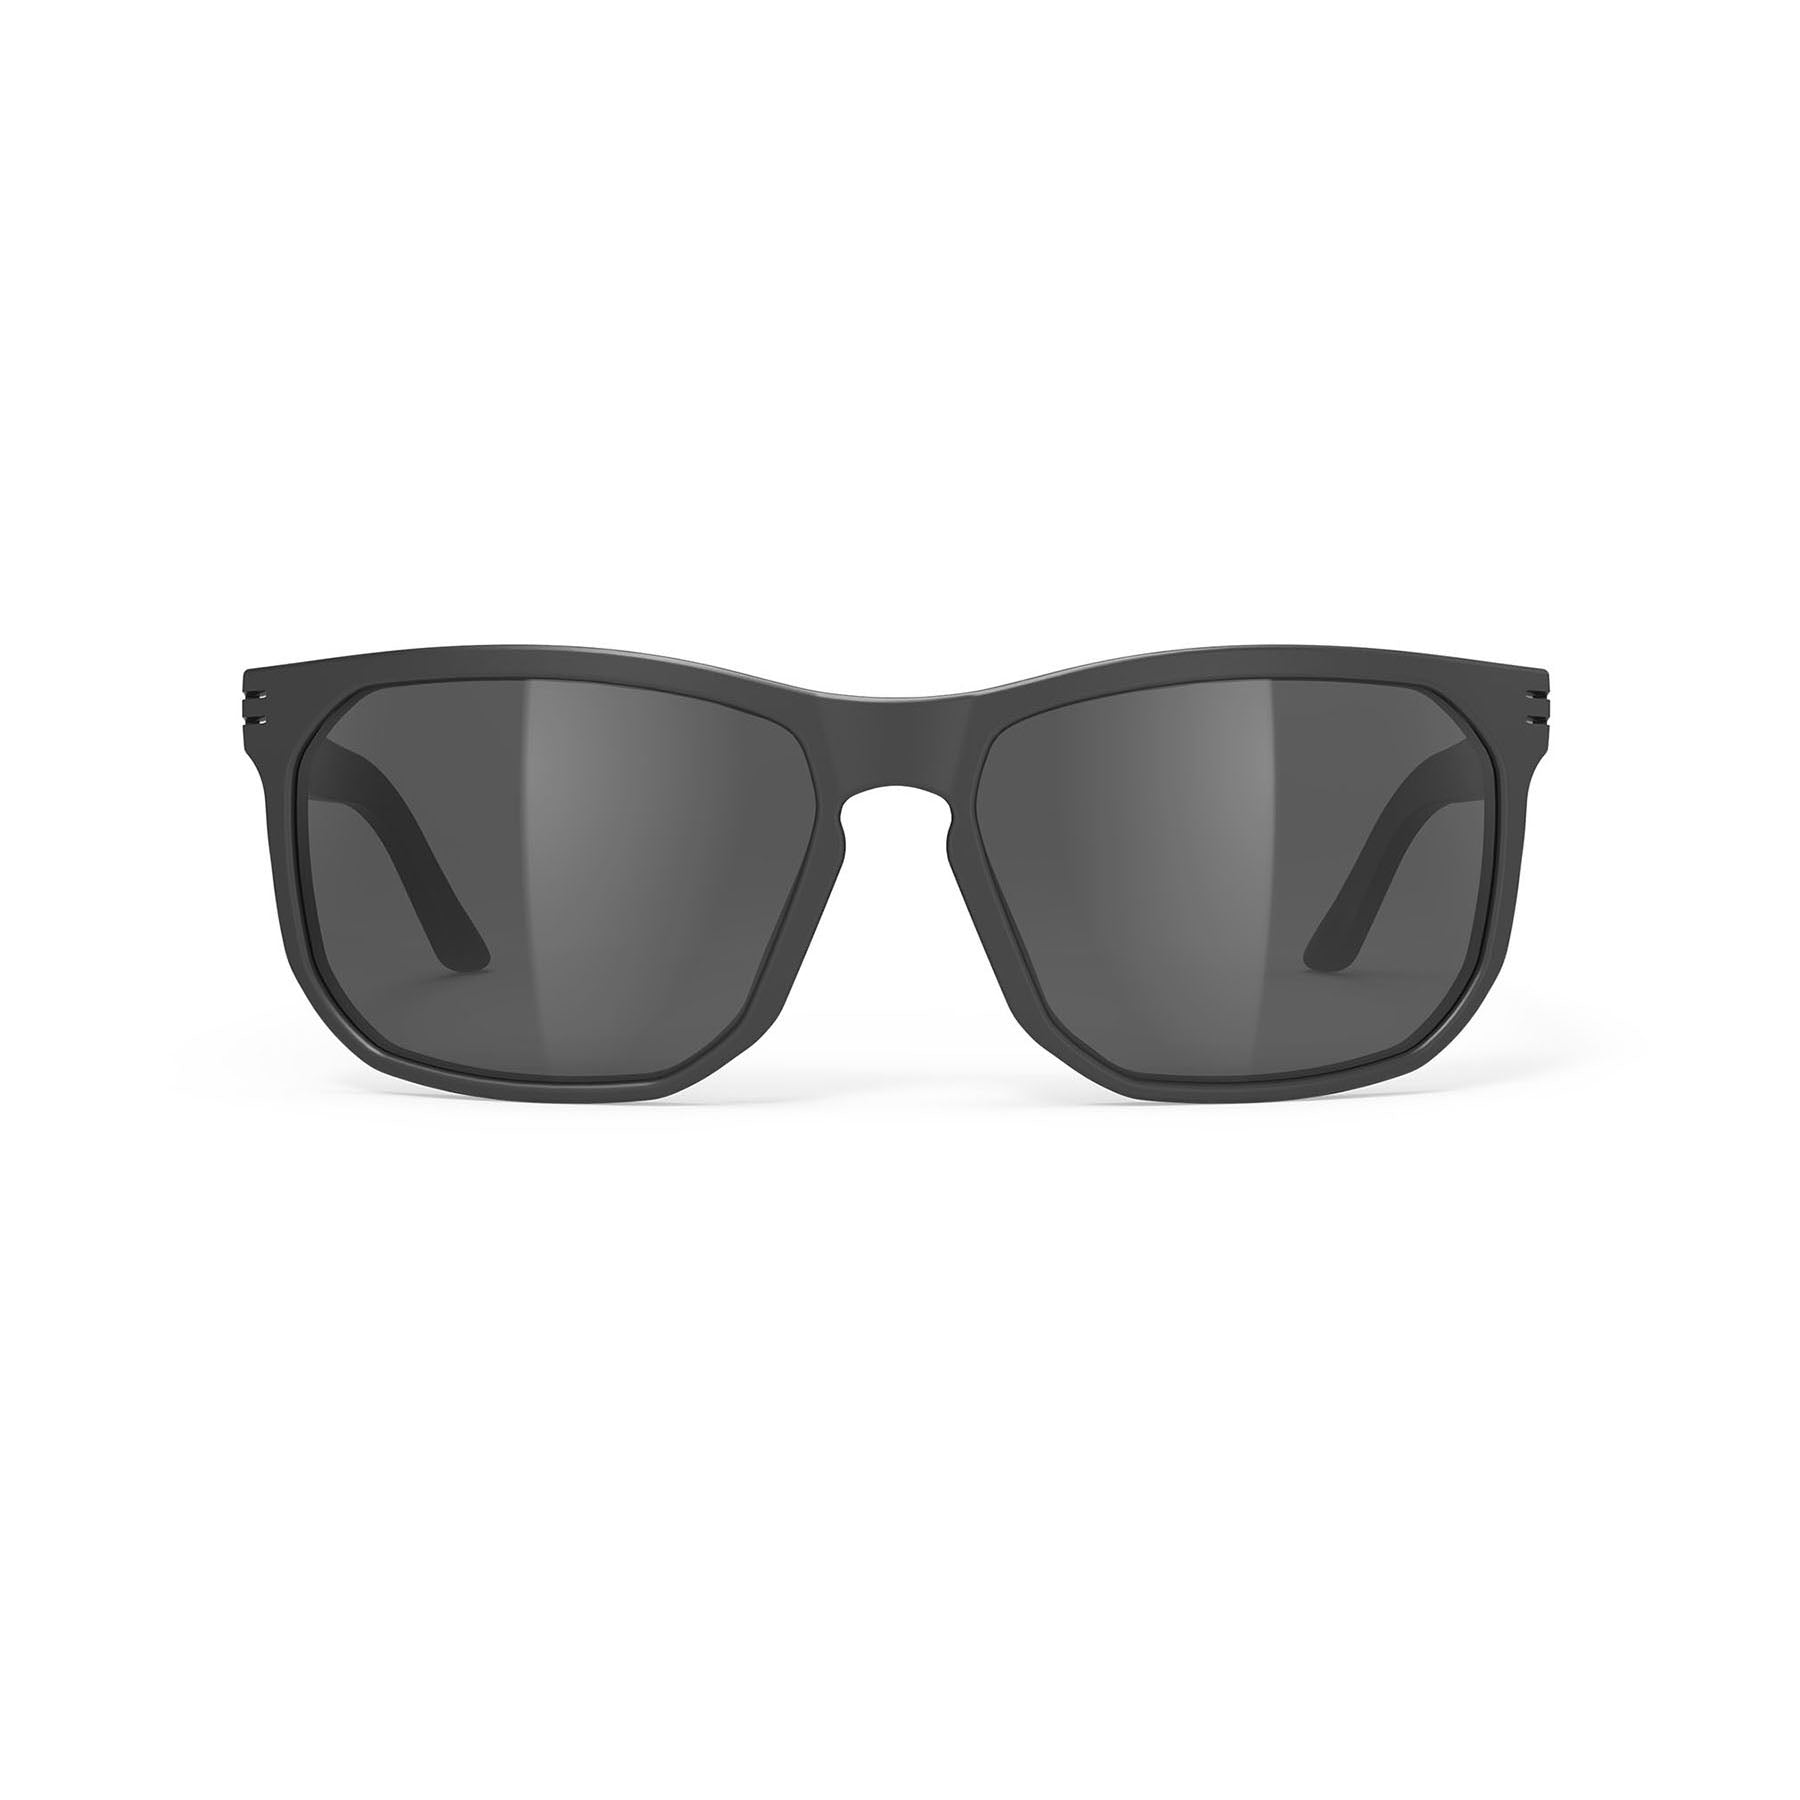 Rudy Project Soundrise lifestyle and beach prescription sunglasses#color_soundrise-black-matte-with-polar-3fx-grey-laser-lenses